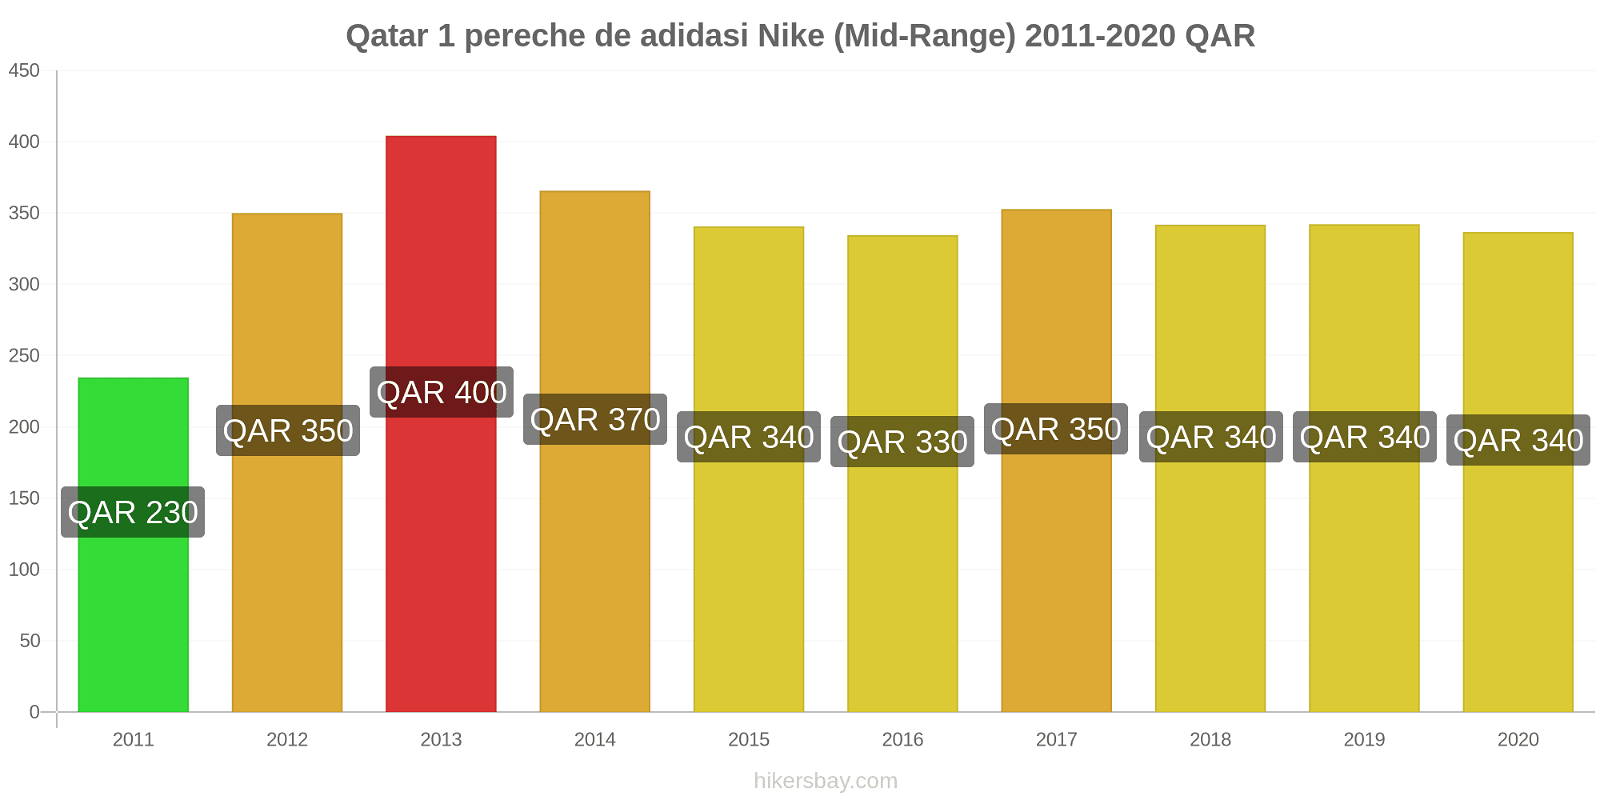 Qatar modificări de preț 1 pereche de adidasi Nike (Mid-Range) hikersbay.com